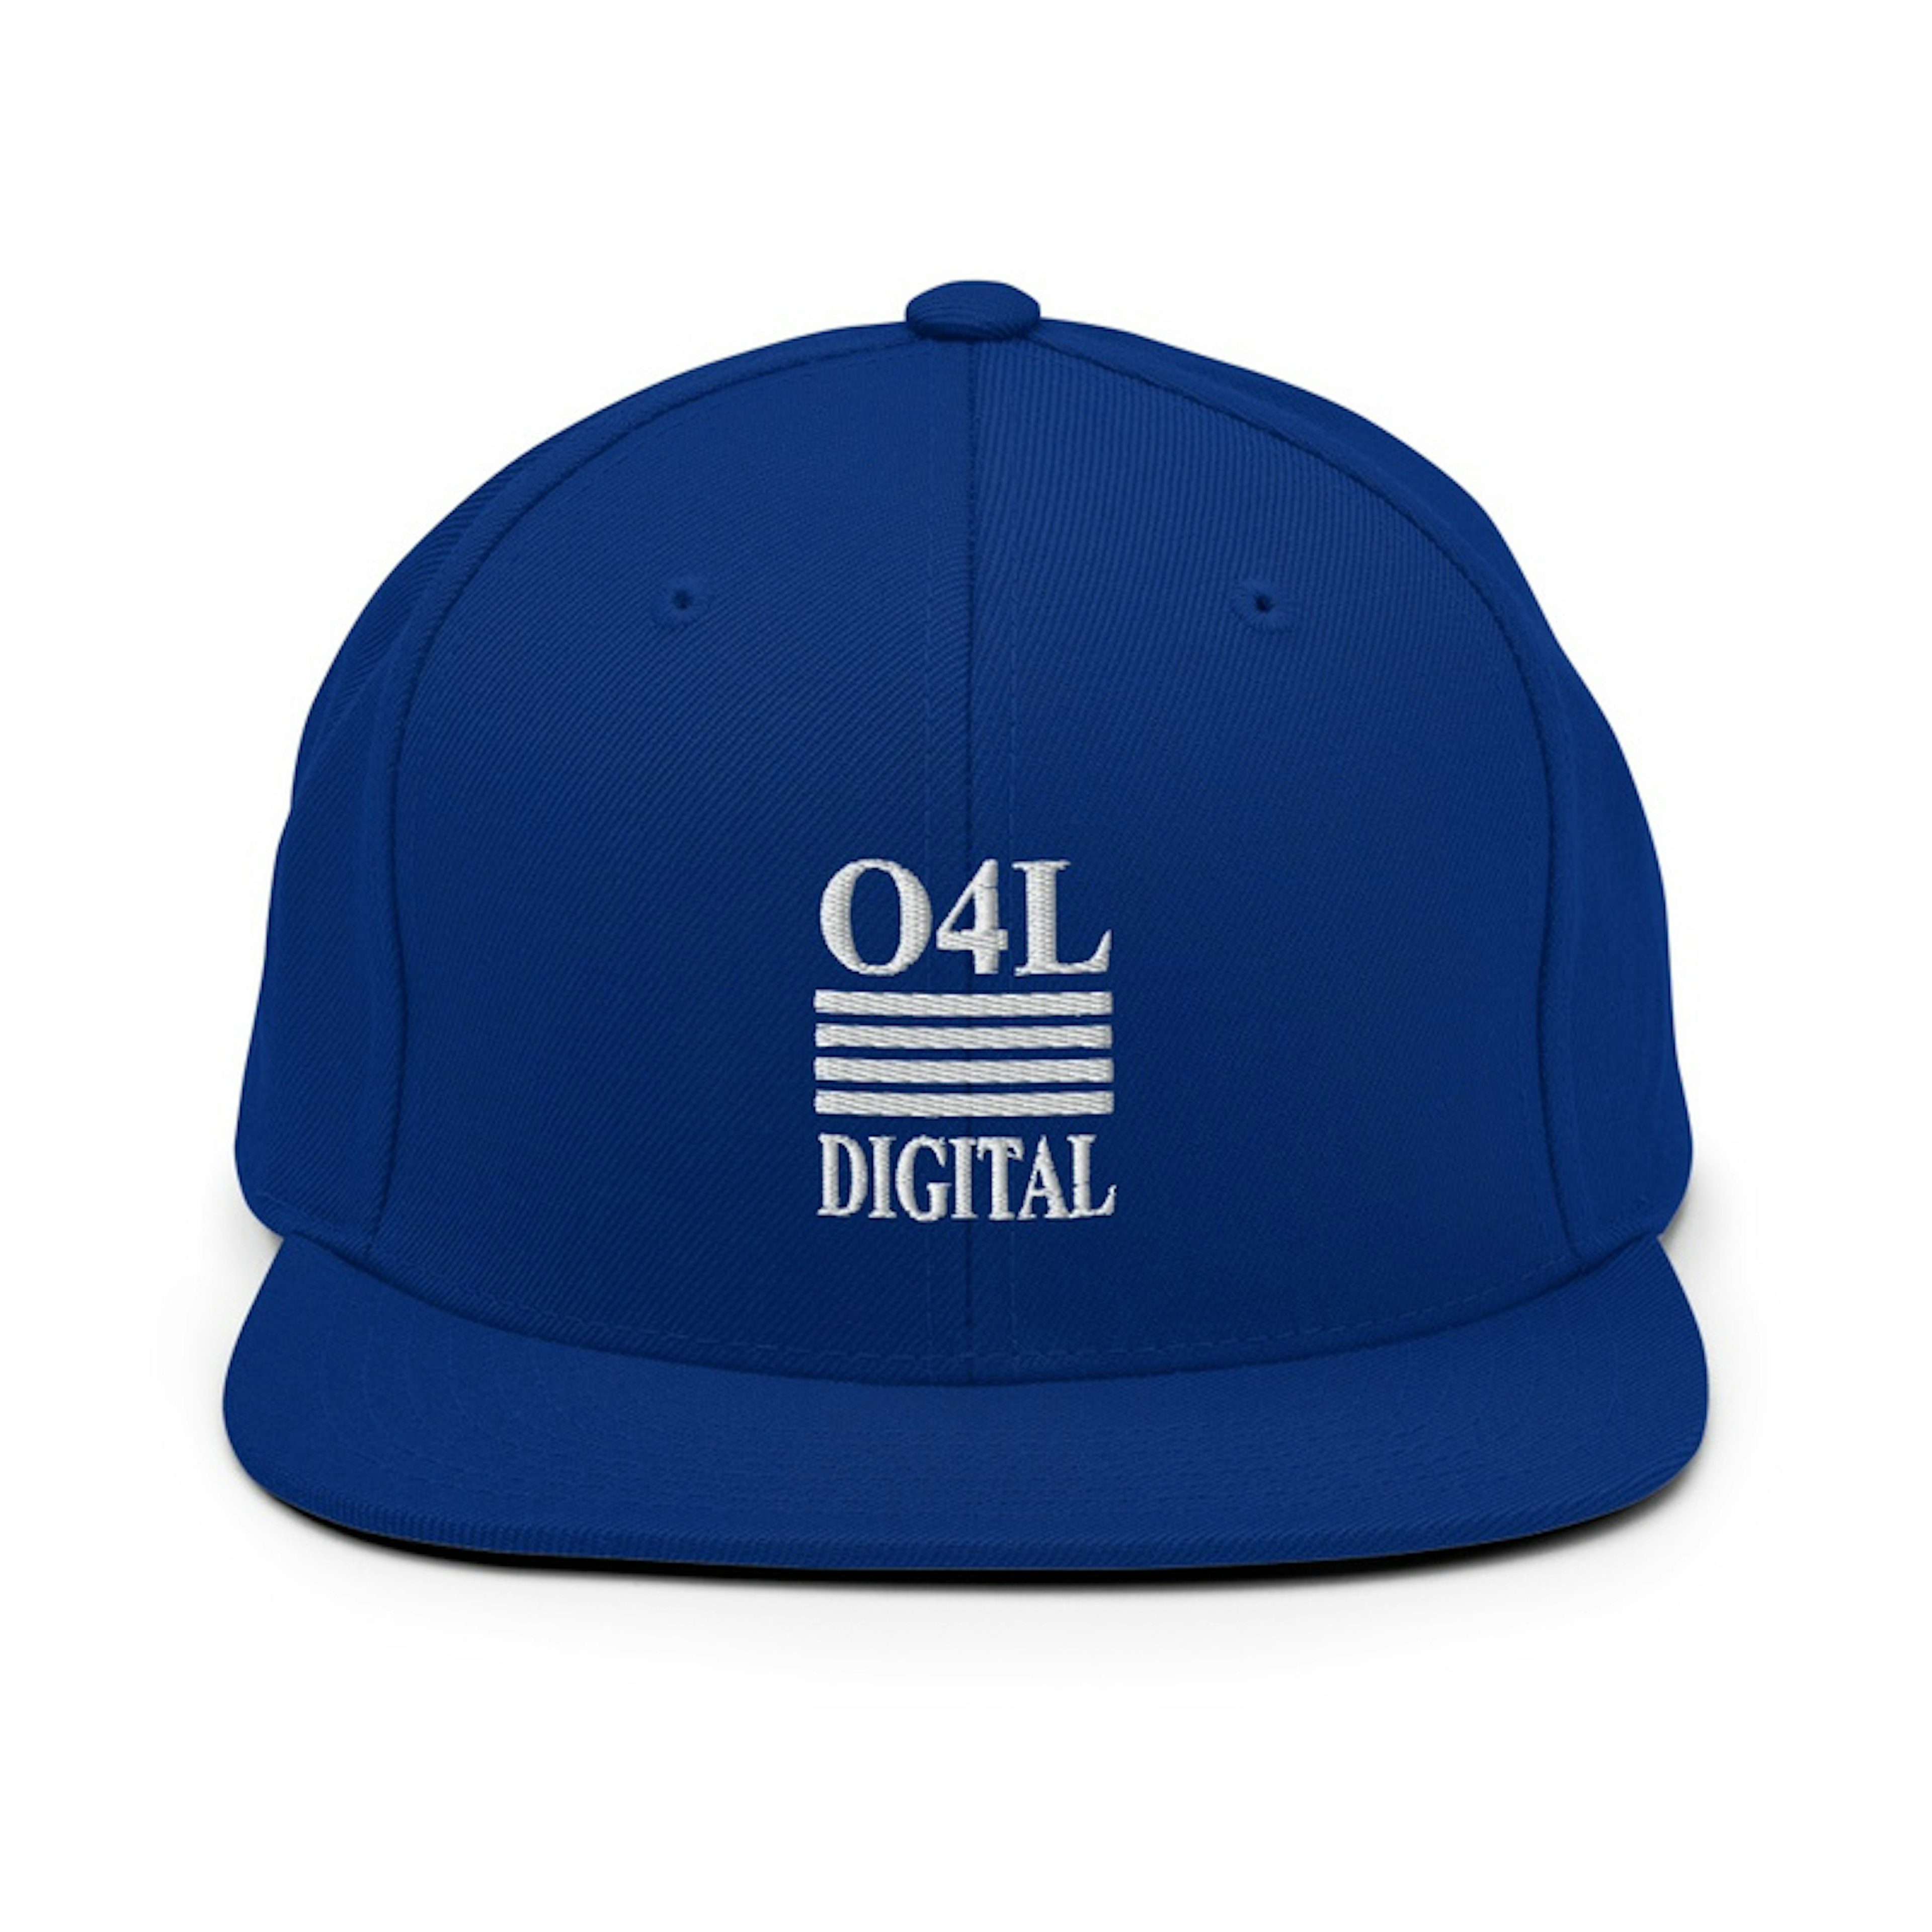 O4L Digital - Snapback - Blue